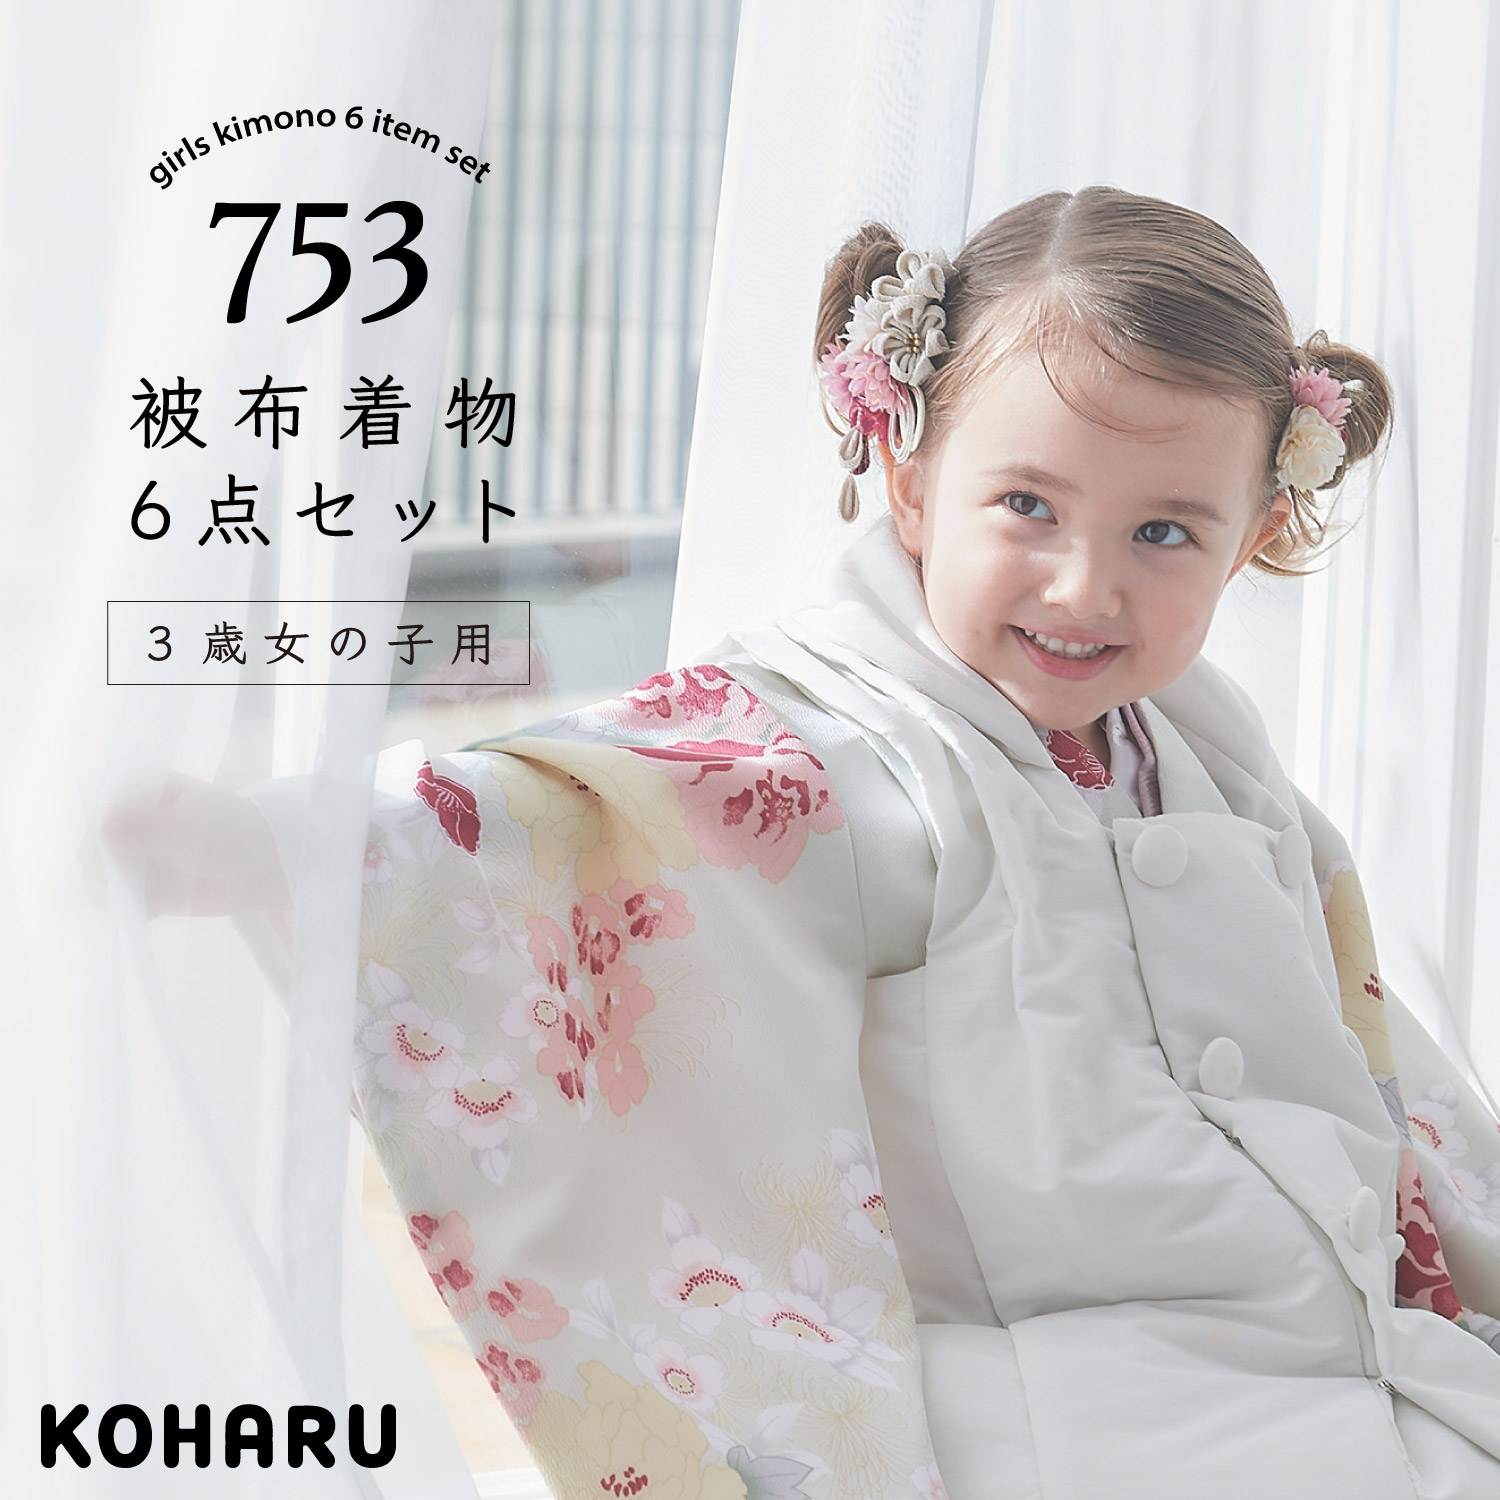 KOHARU 七五三 3歳女の子 被布着物6点セット A-Type